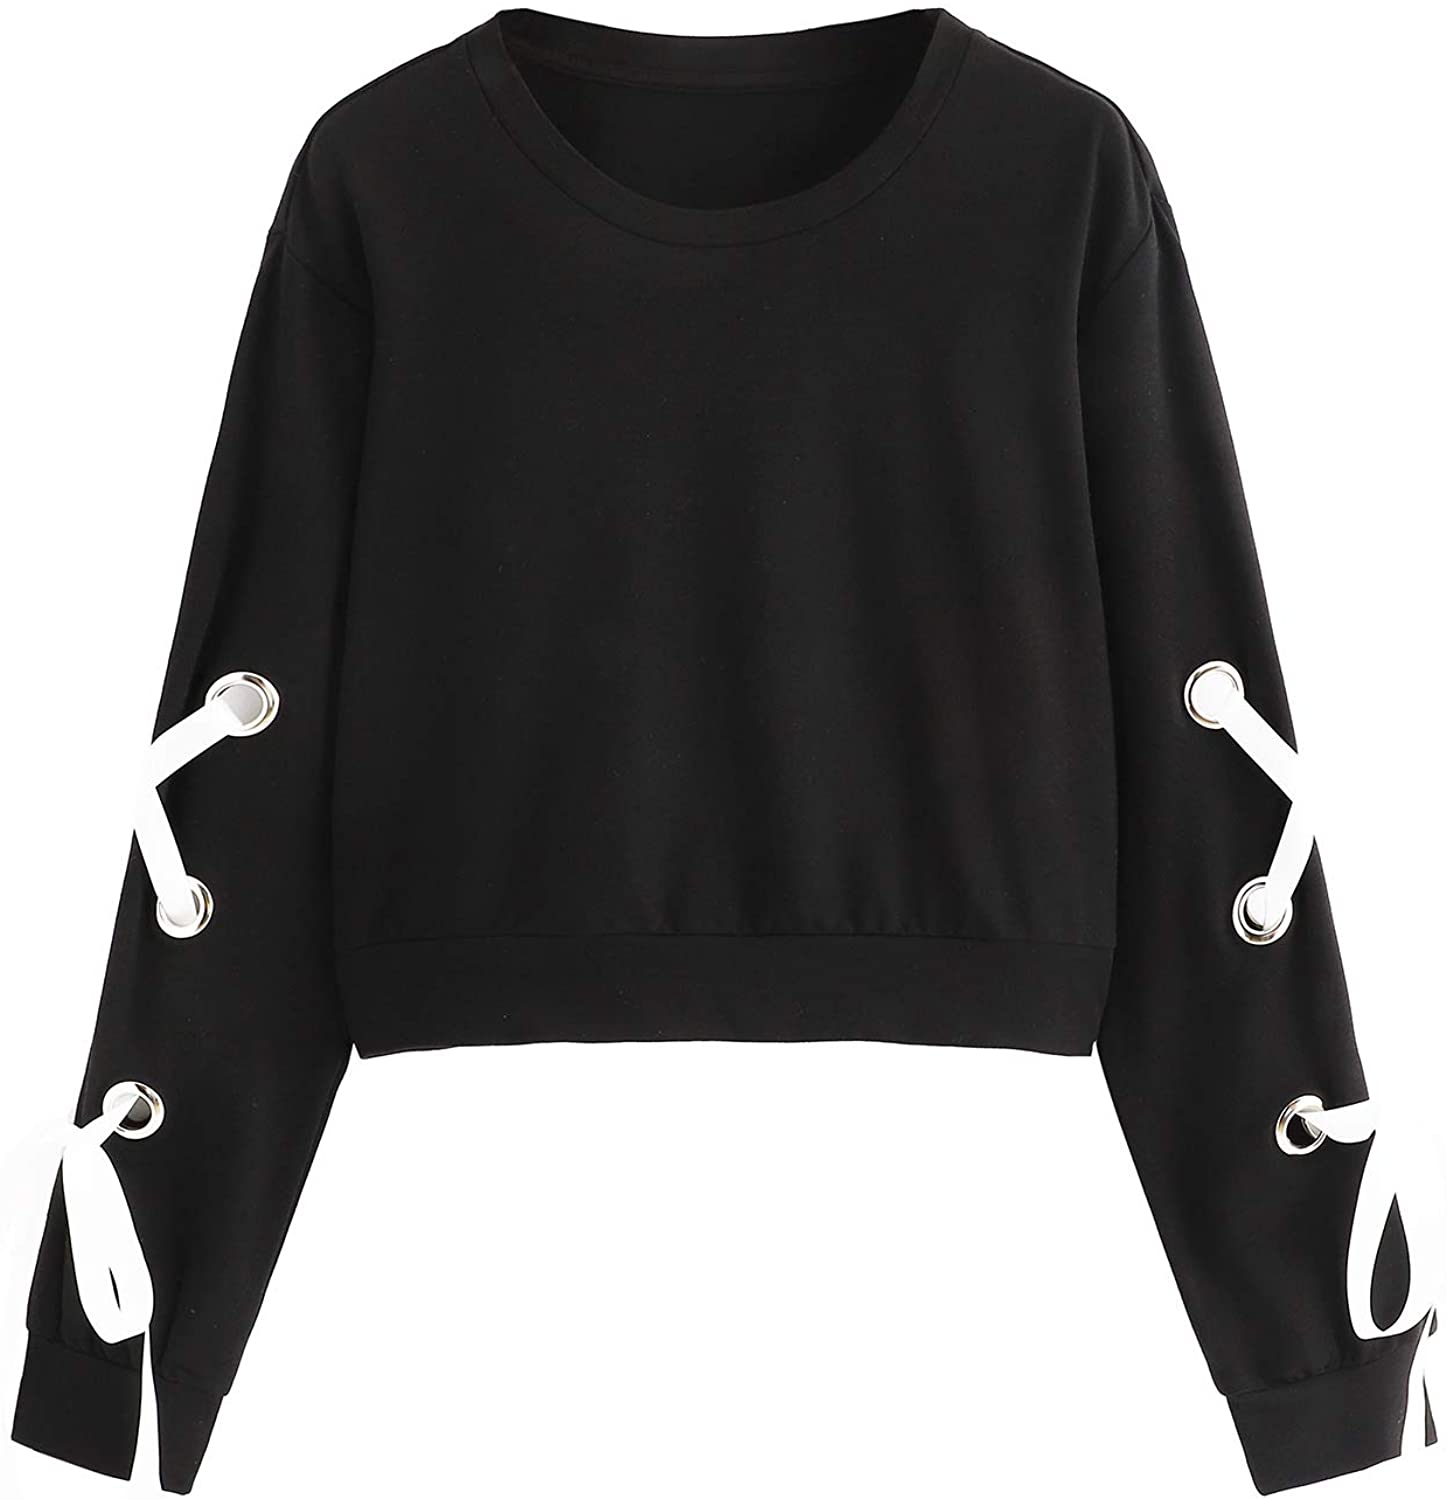 SweatyRocks Women's Long Sleeve Sweatshirt Star Graphic Print Pullover Shirt Top 